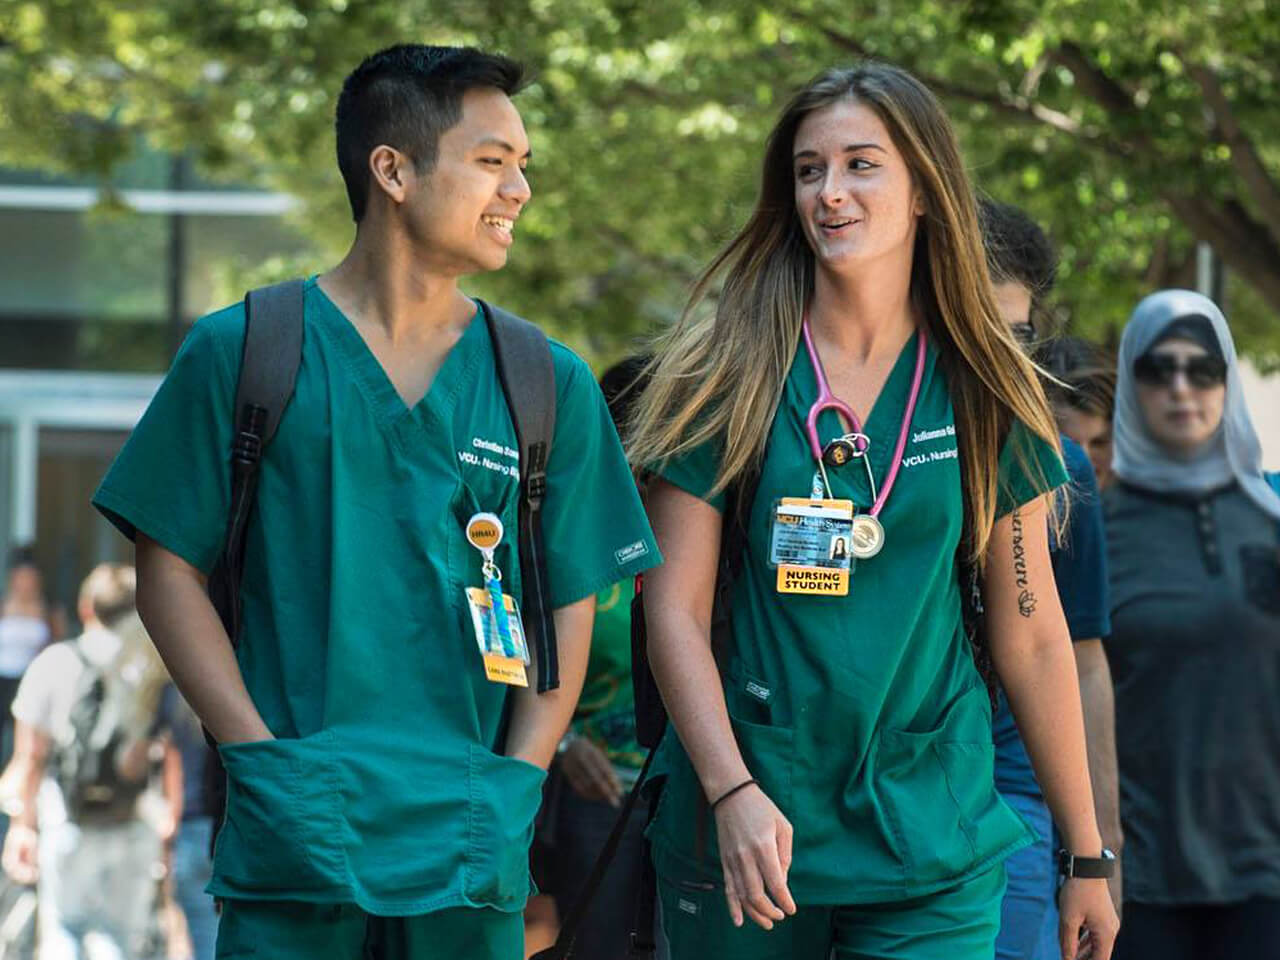 Two nursing students walking together